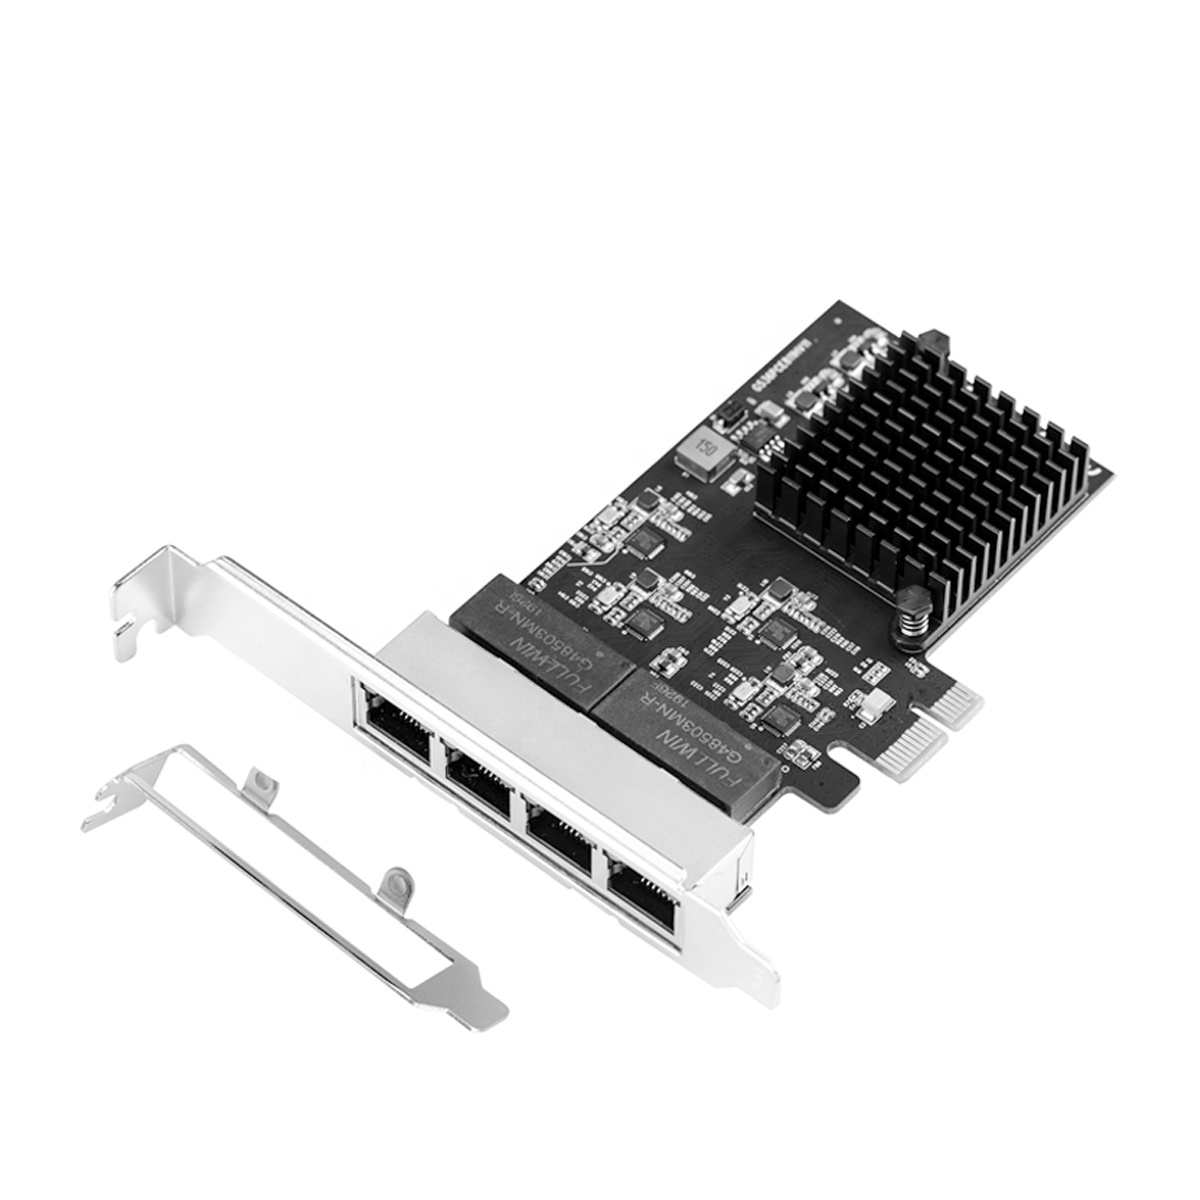 Placa de rede PCIe 4 portas GigaLan (RJ45) - Chipset RTL8111H - Full 120mm + Slim 80mm